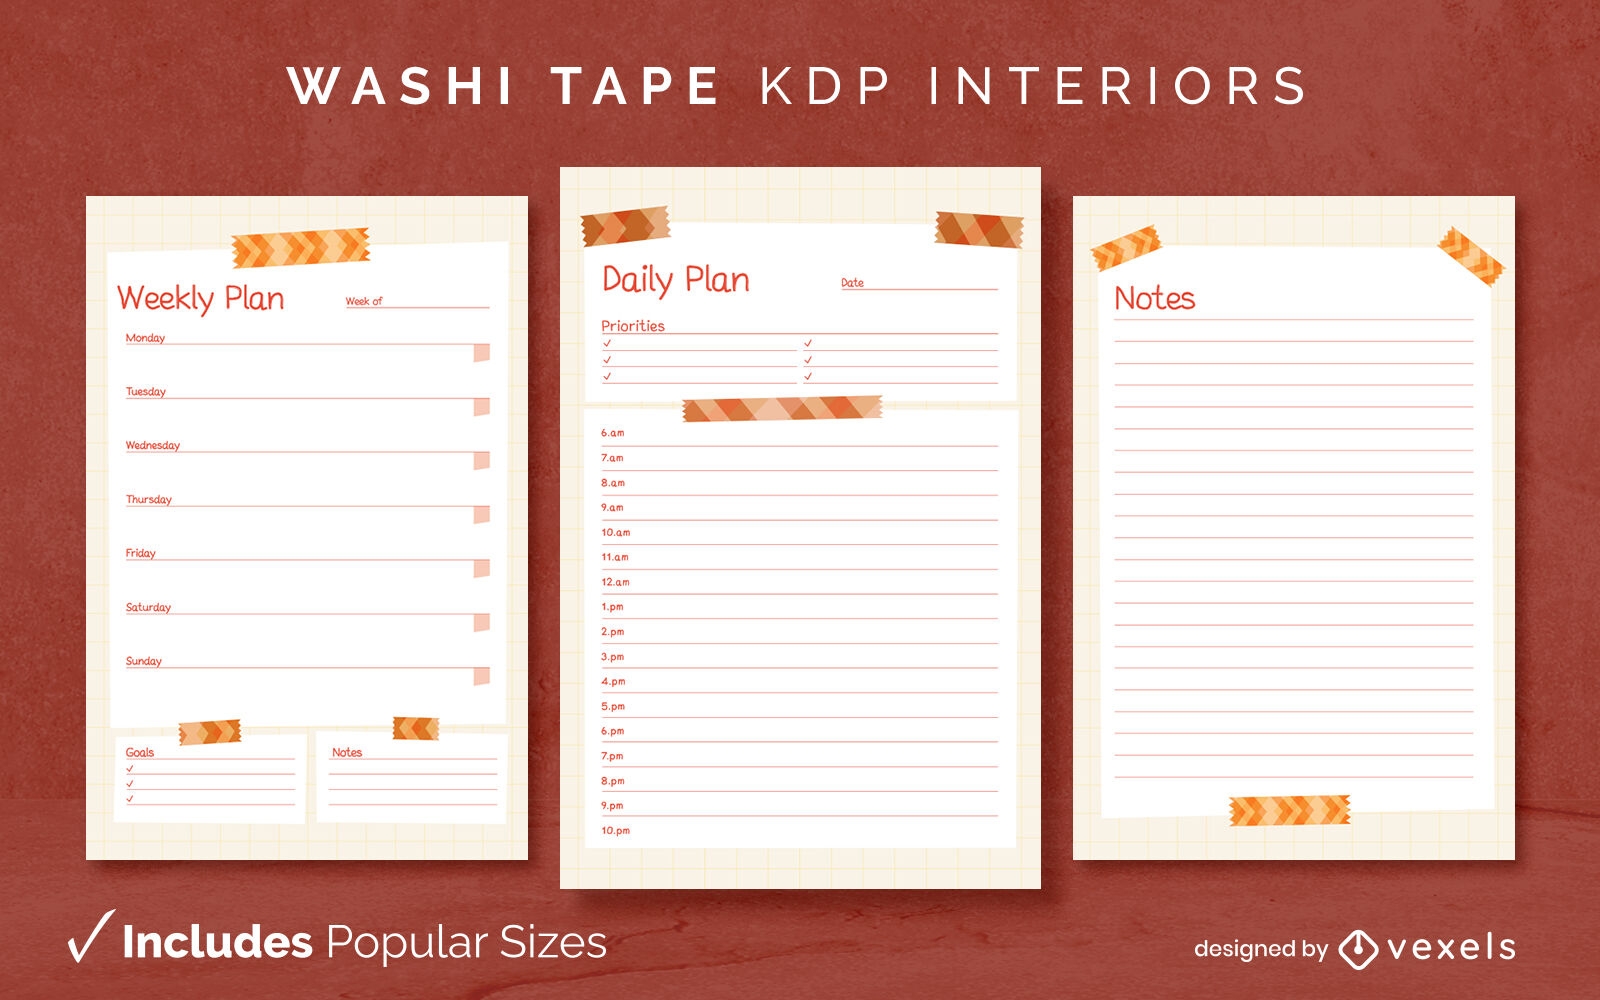 Washi tape journal design template KDP